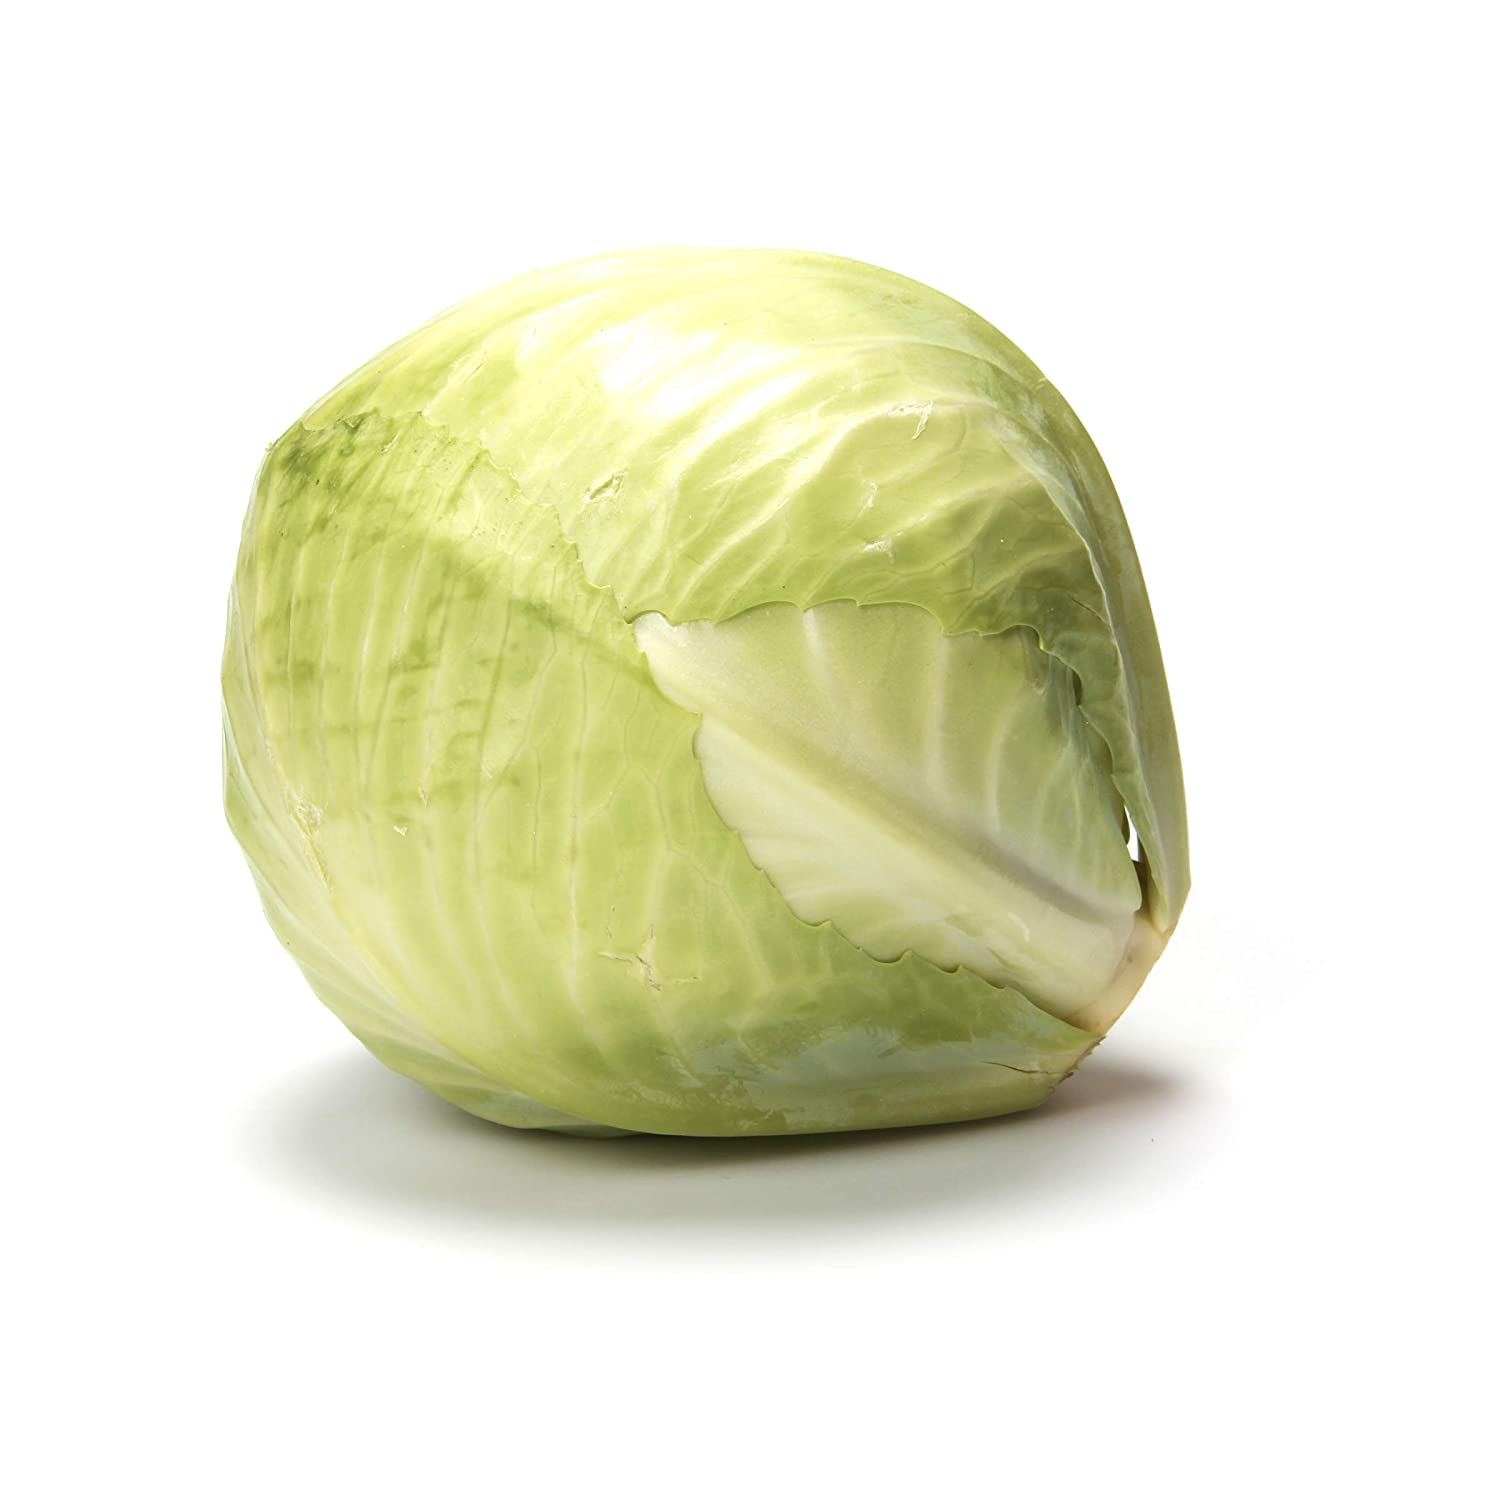 Organic Green Cabbage